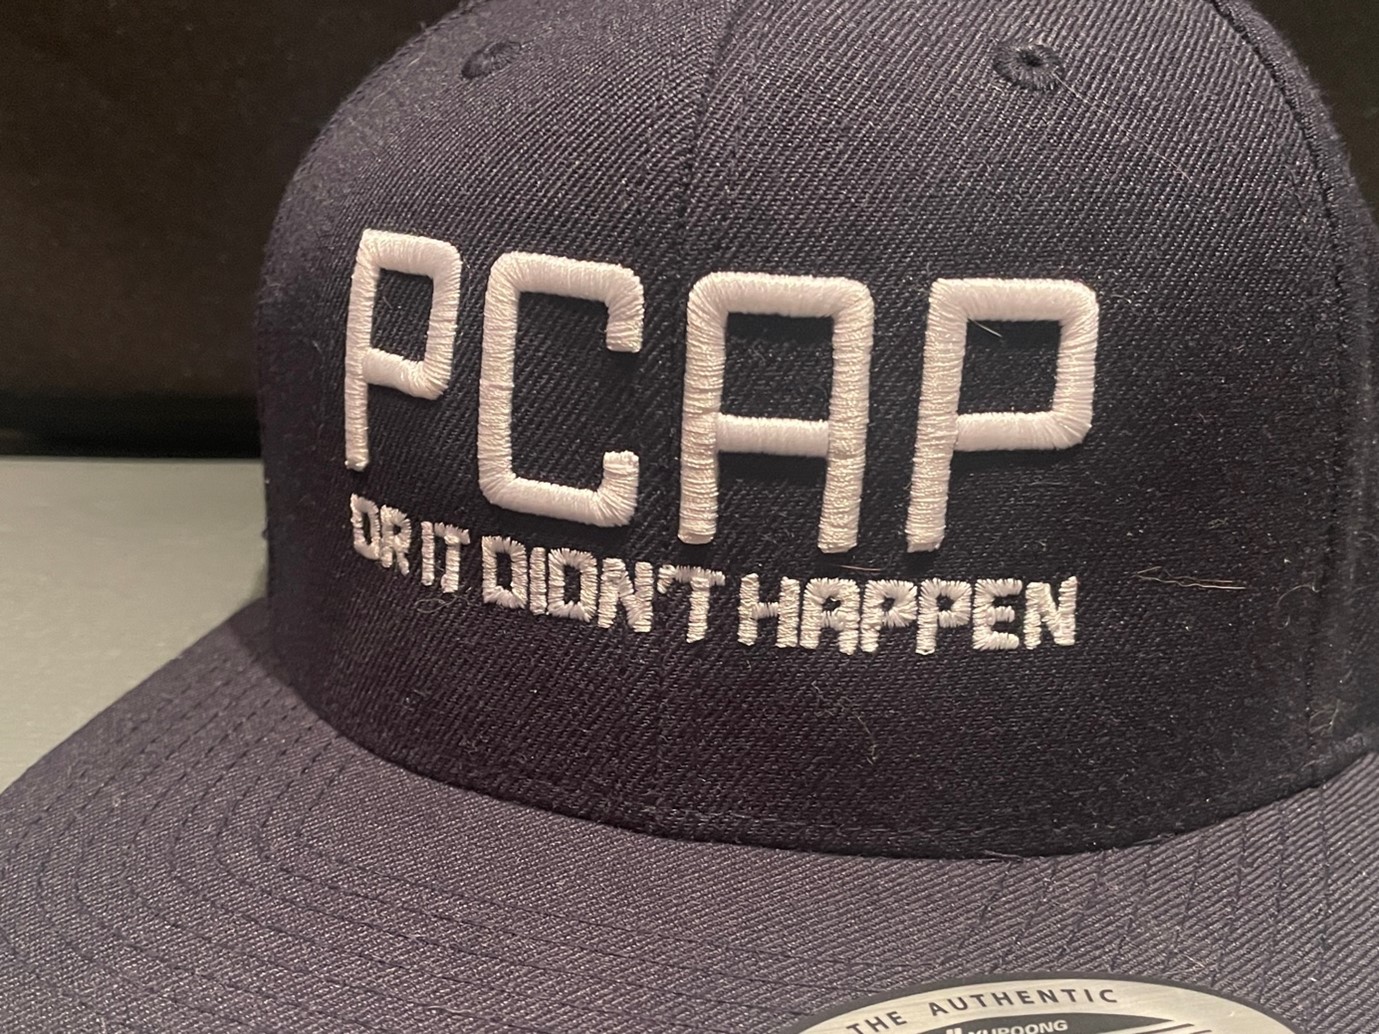 A cap with a text: "PCAP" or it didn't happen.